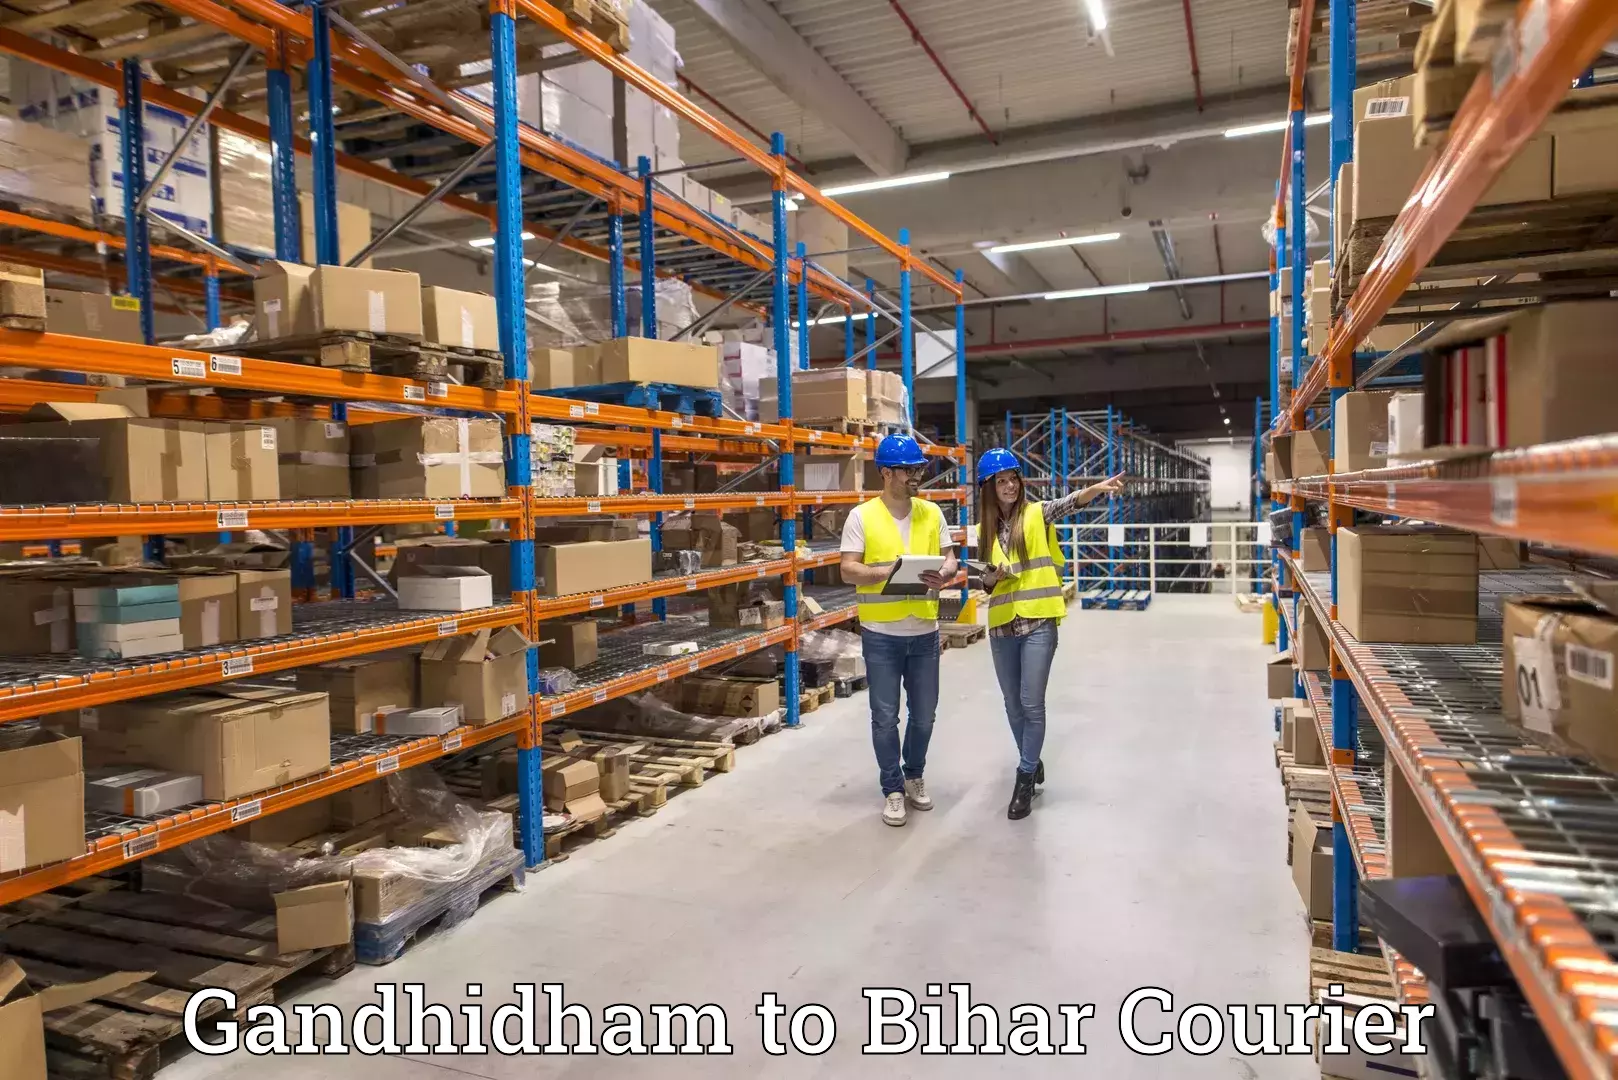 Flexible delivery schedules in Gandhidham to Jiwdhara